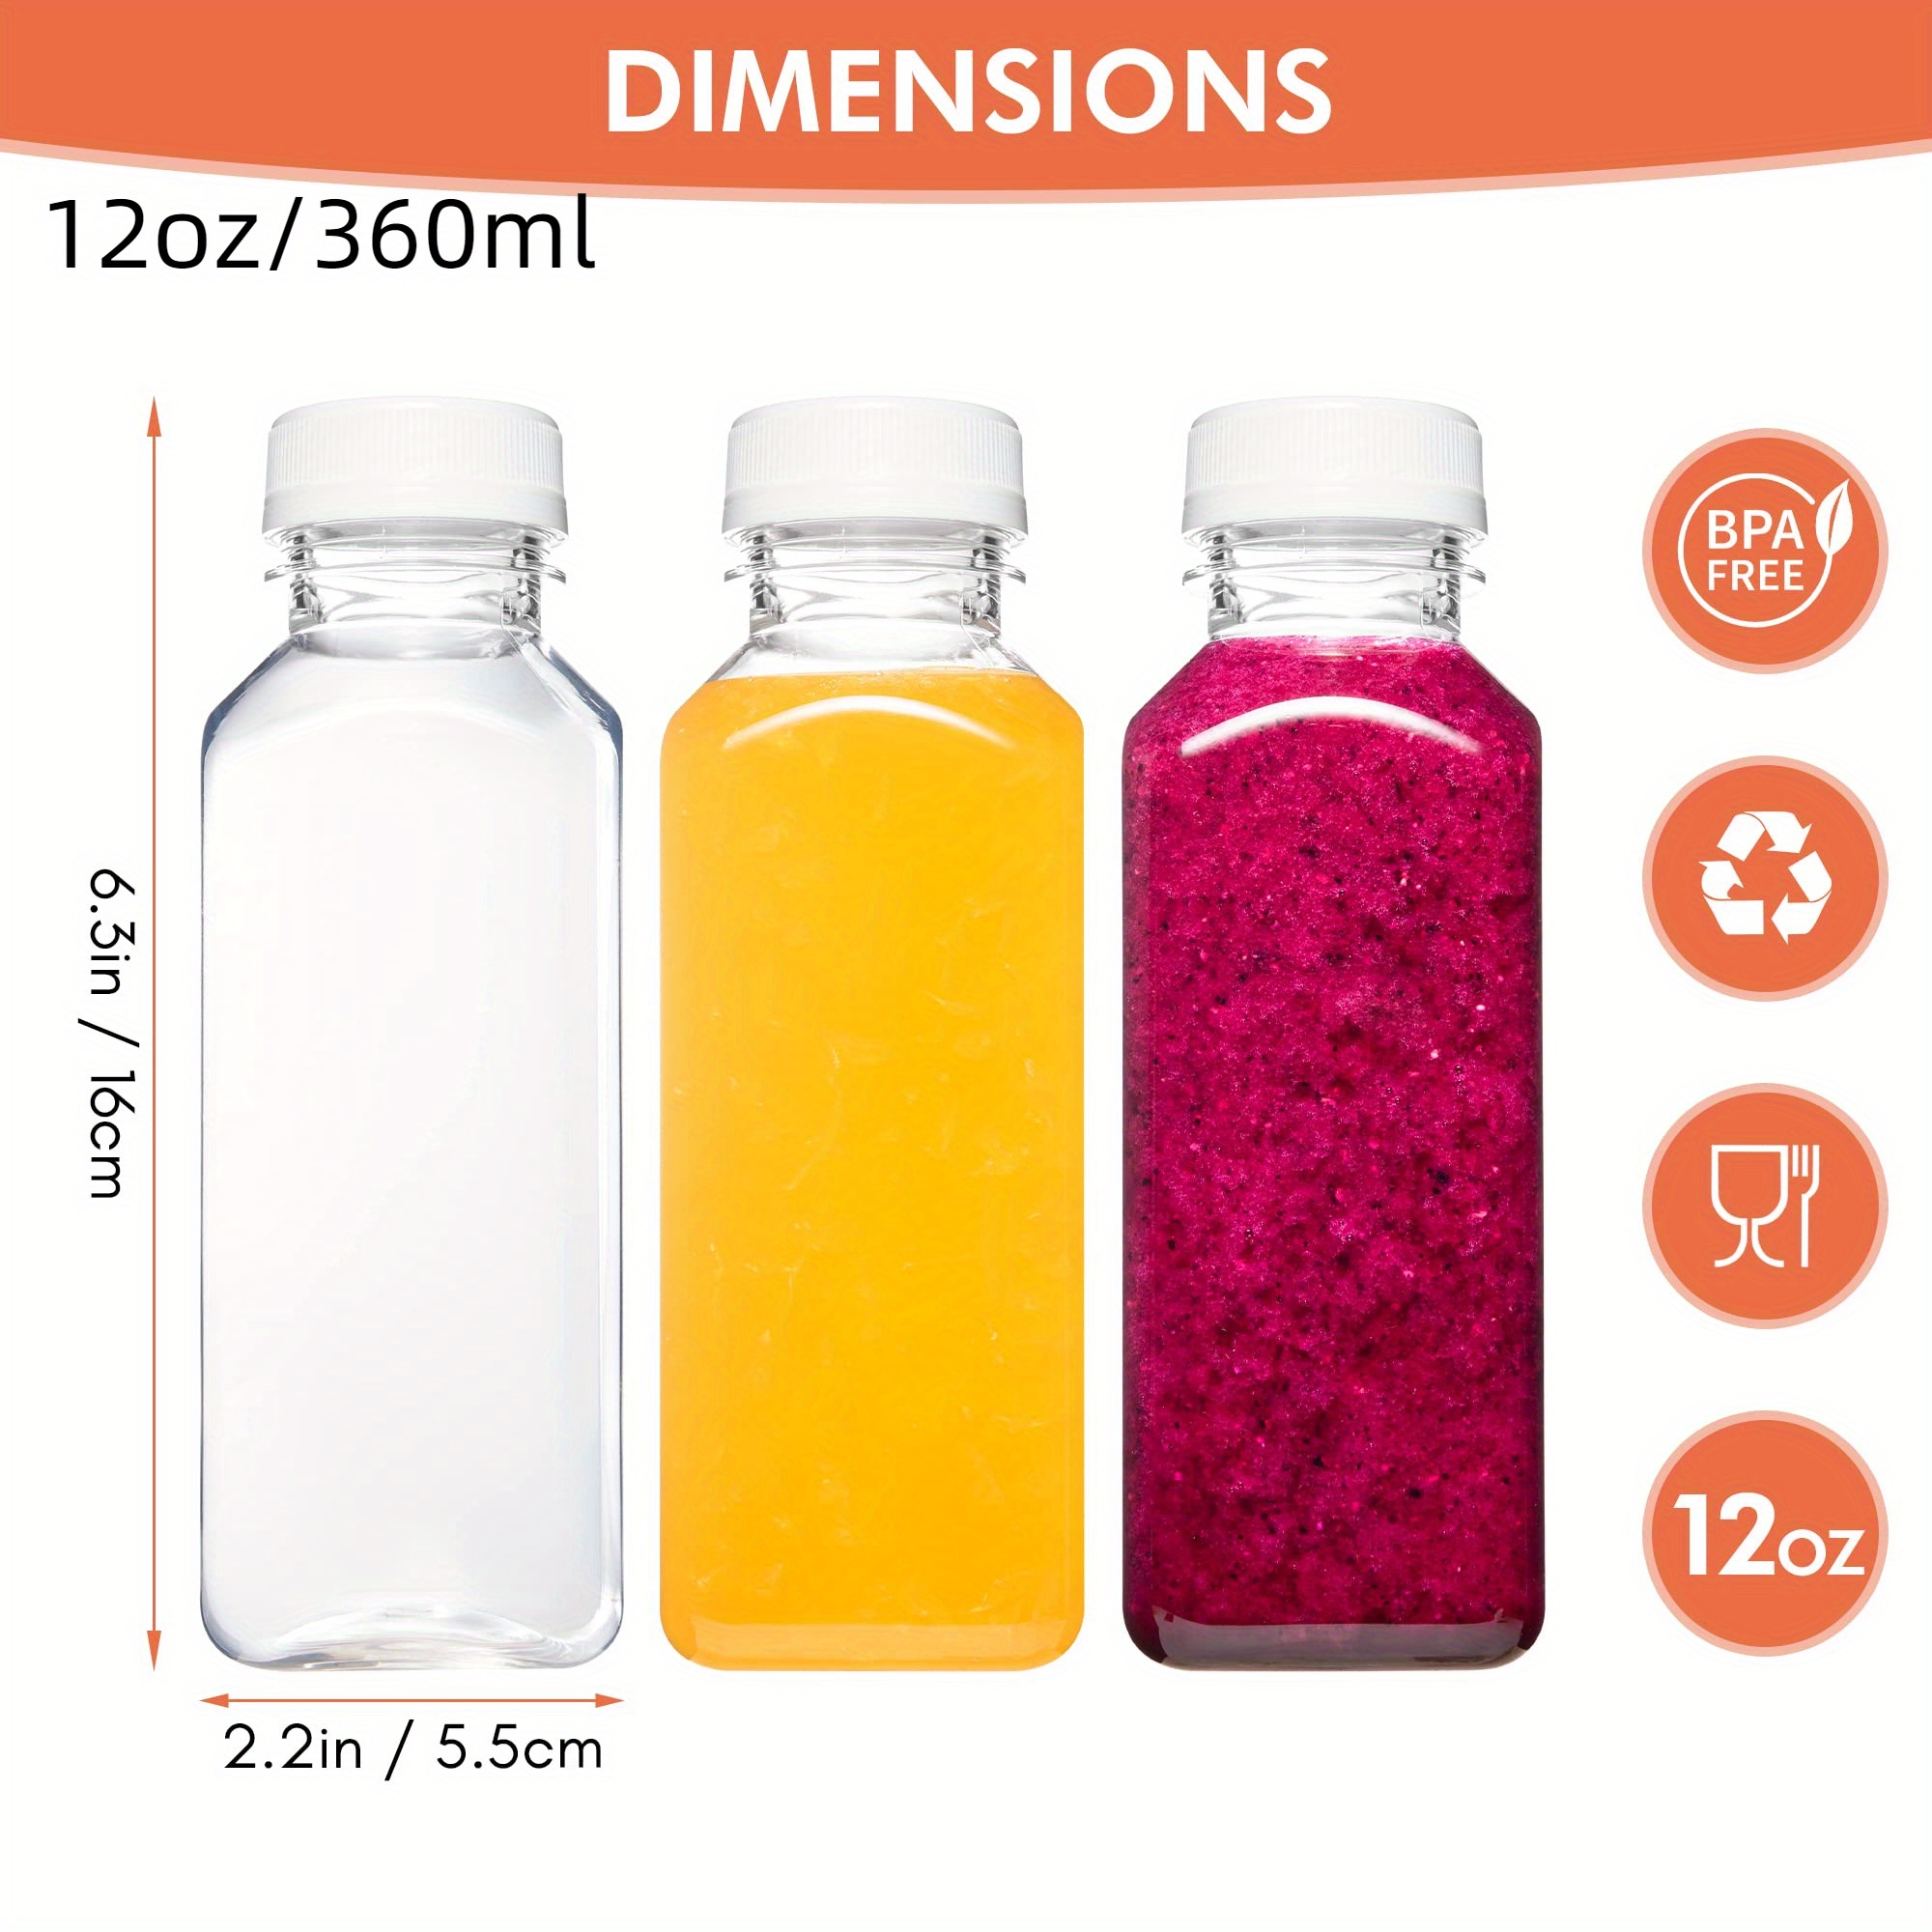 12-Pack, 16 Oz Clear Plastic Juice Bottles with Lids